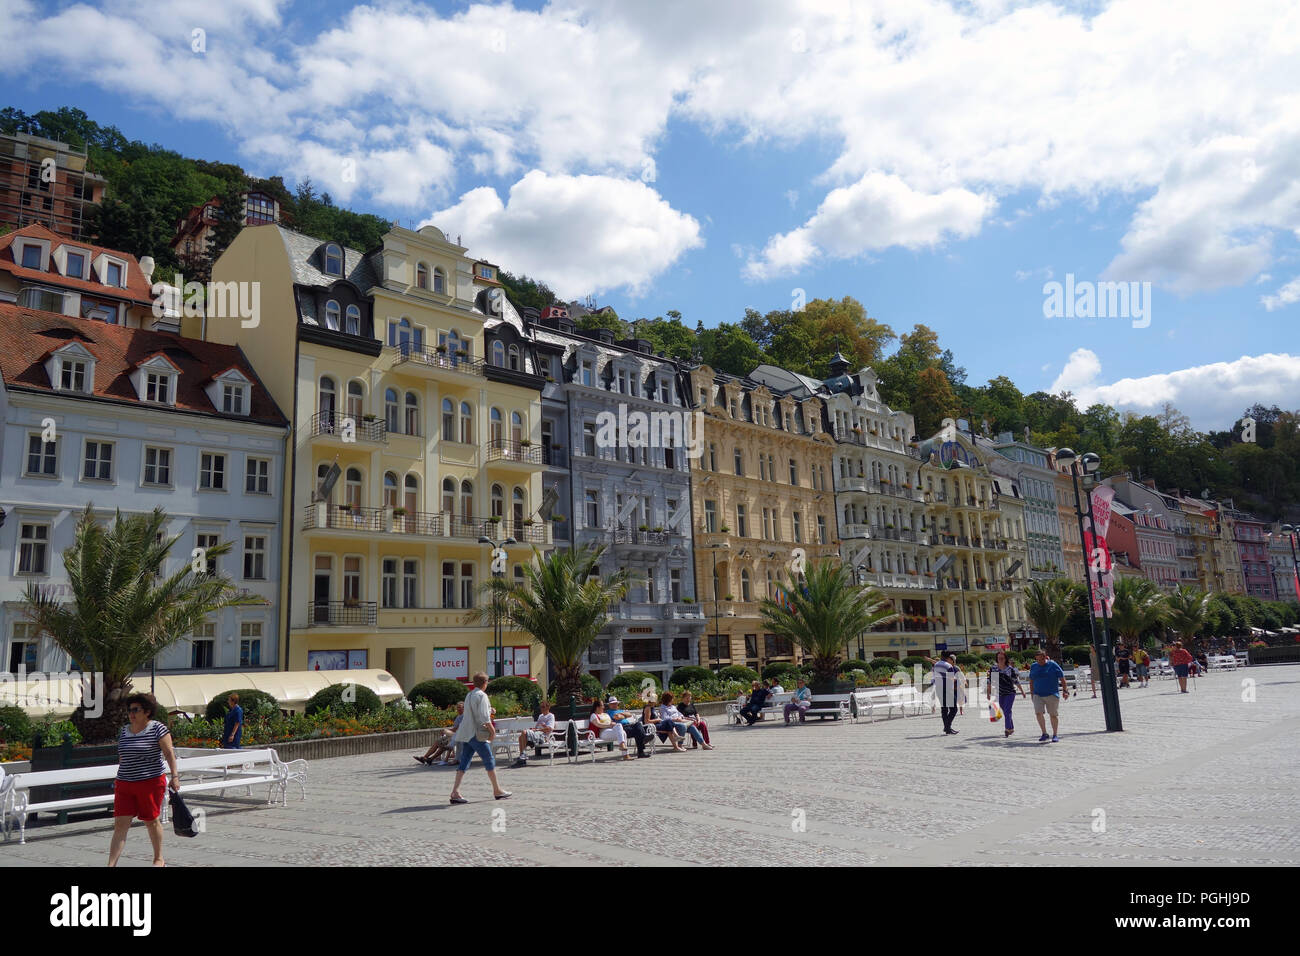 Street scene of promenade in spa town of Karlovy Vary (Karlsbad) in West Bohemia in Czech Republic Stock Photo